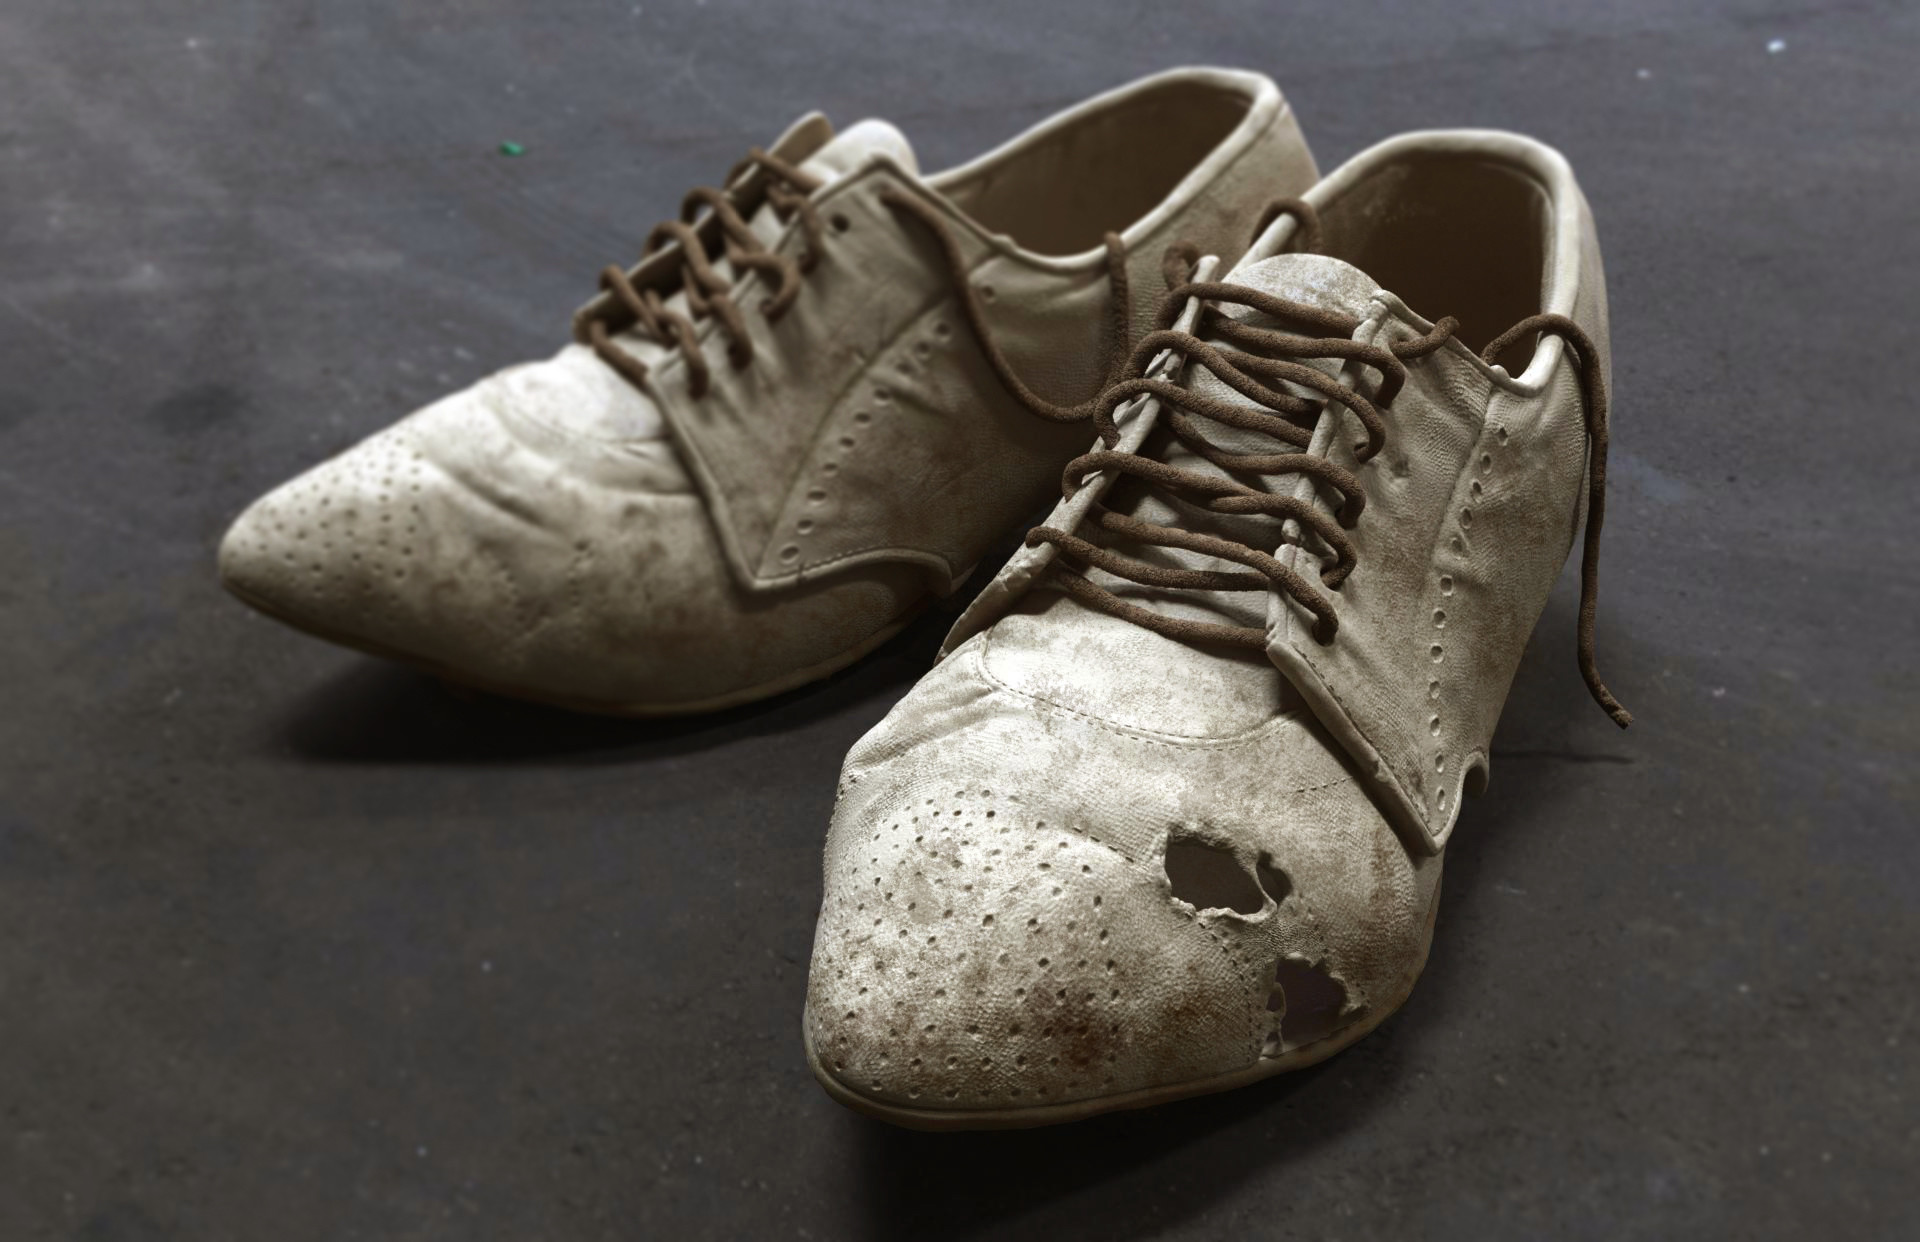 Shunzi Gao - Worn-out leather shoes